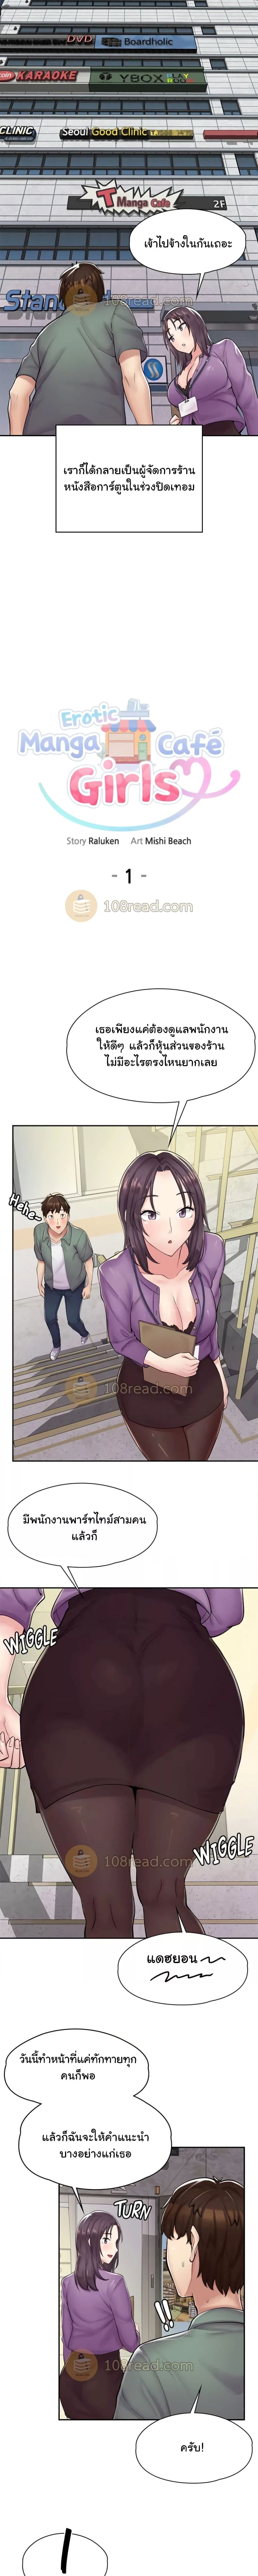 Erotic Manga Café Girls ตอนที่ 1 ภาพ 13